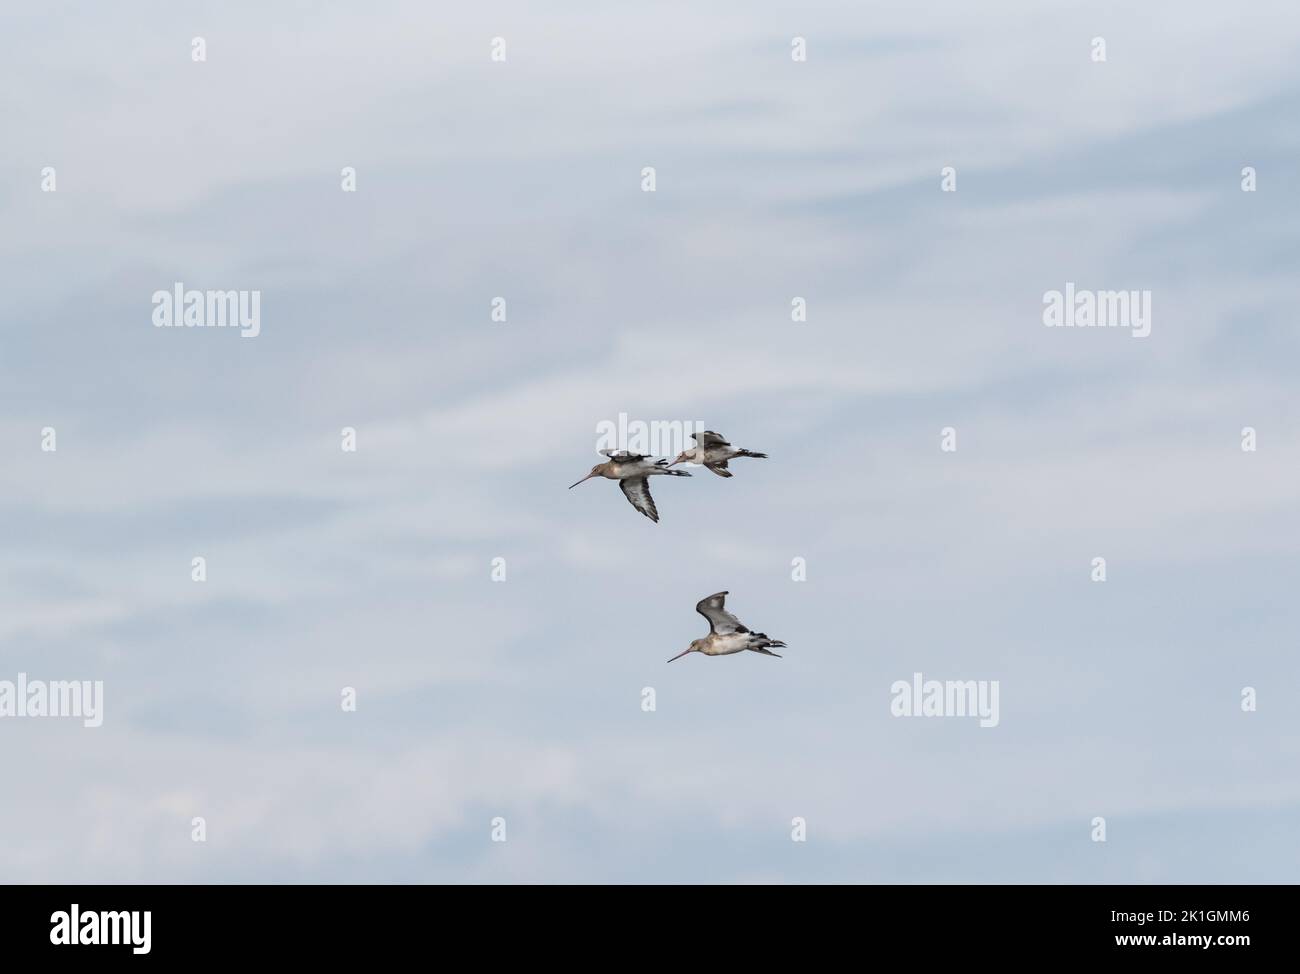 Flying Black-tailed Godwits (Limosa limosa) Stock Photo